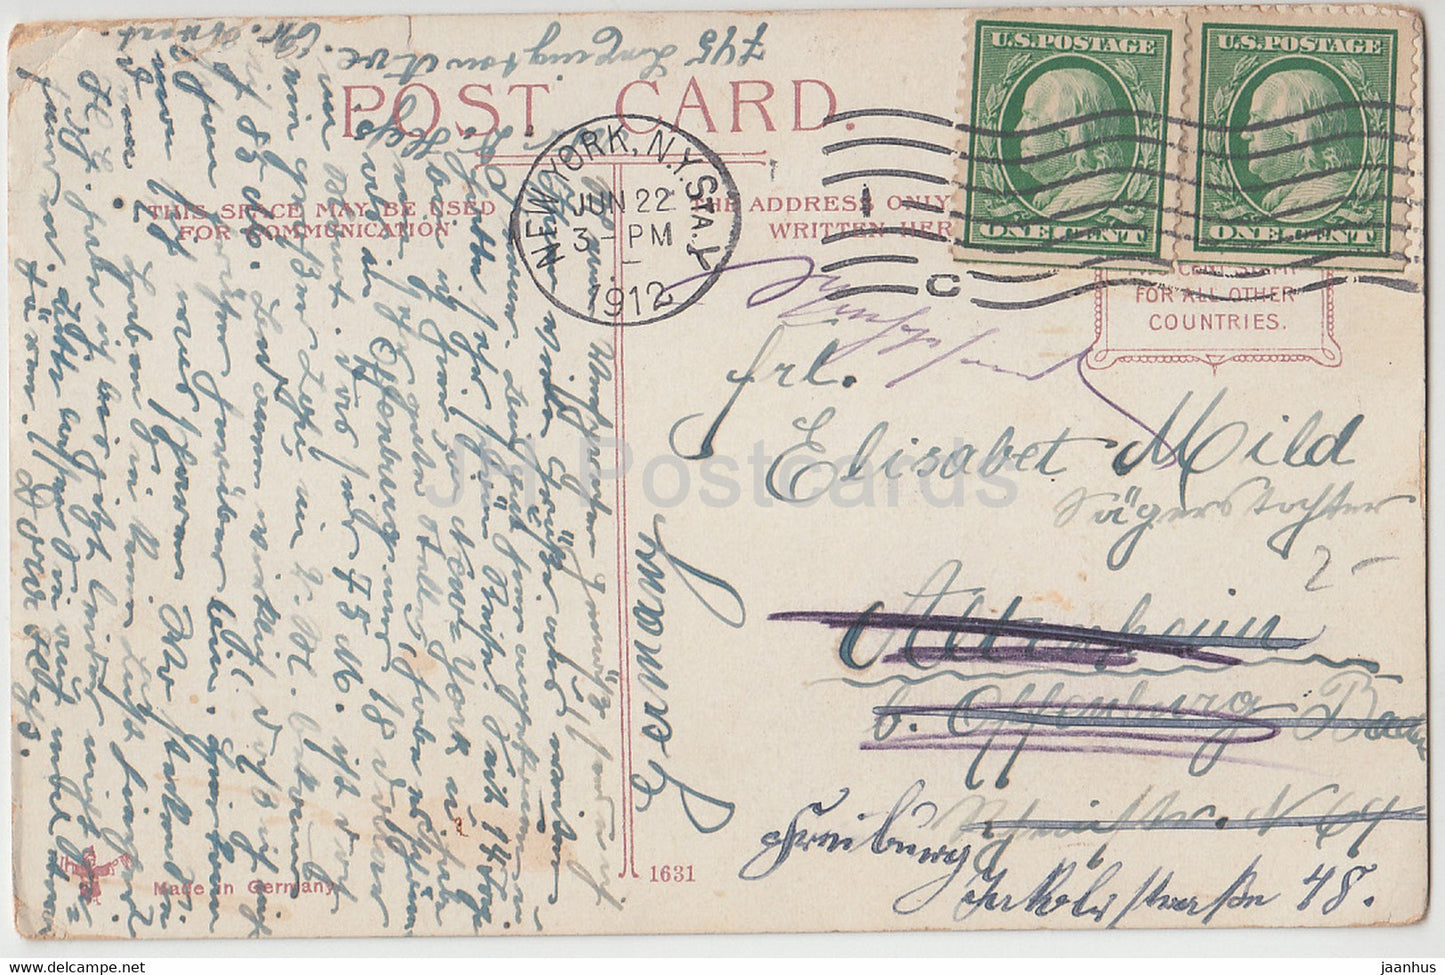 New York - Park Row Building - 1631 - carte postale ancienne -1912 - États-Unis - USA - utilisé